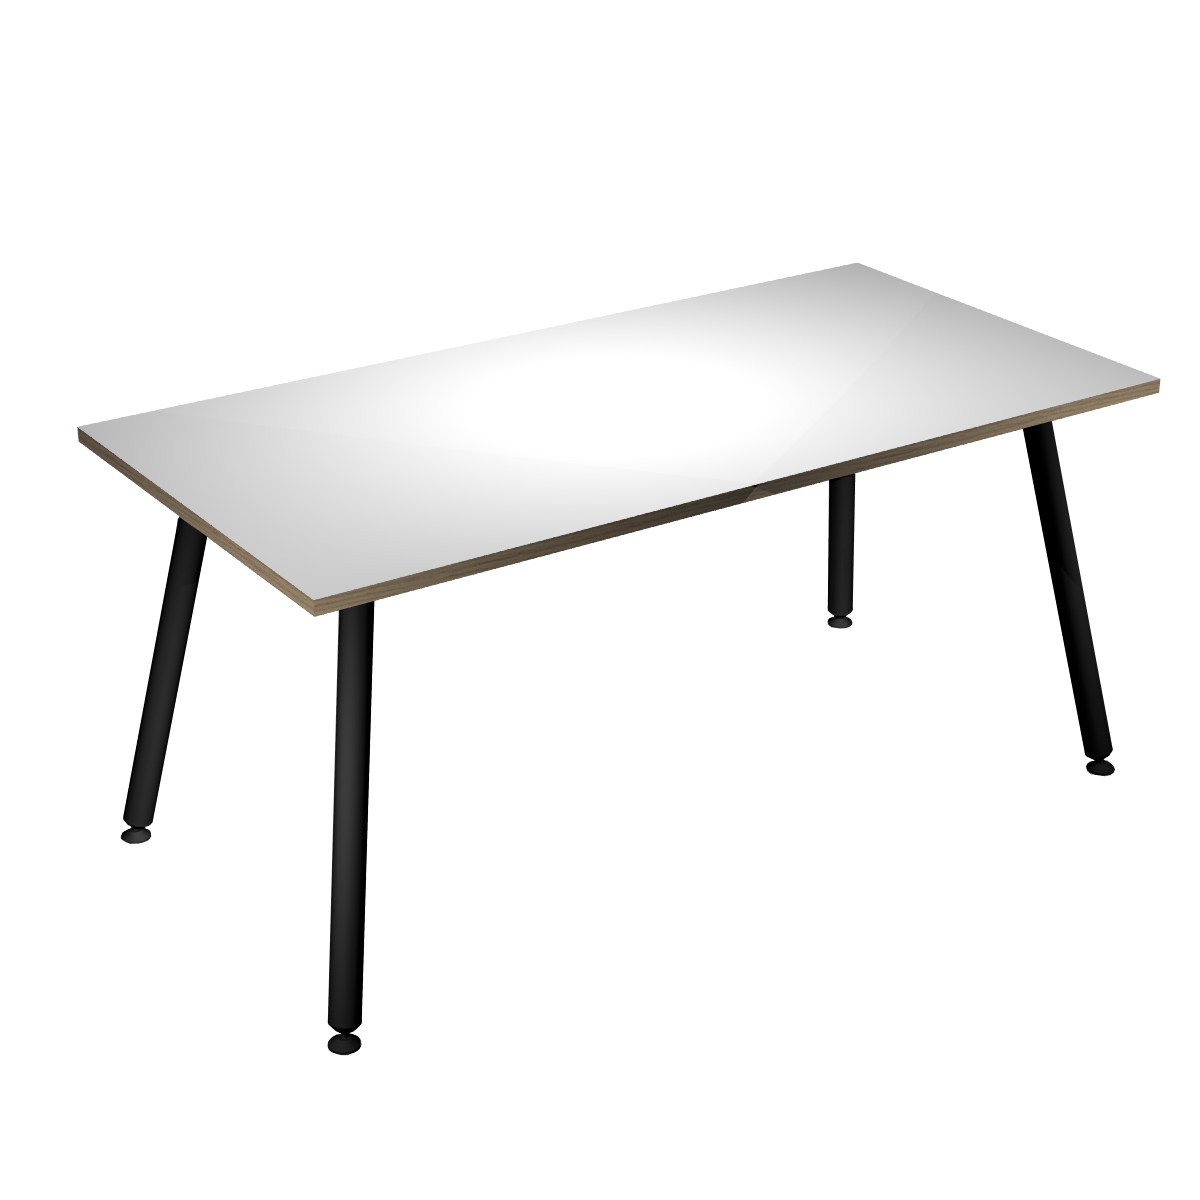 Table haute LEONARDO - 160 x 80 x 105 cm - Pieds métal noirs - Blanc chants chêne